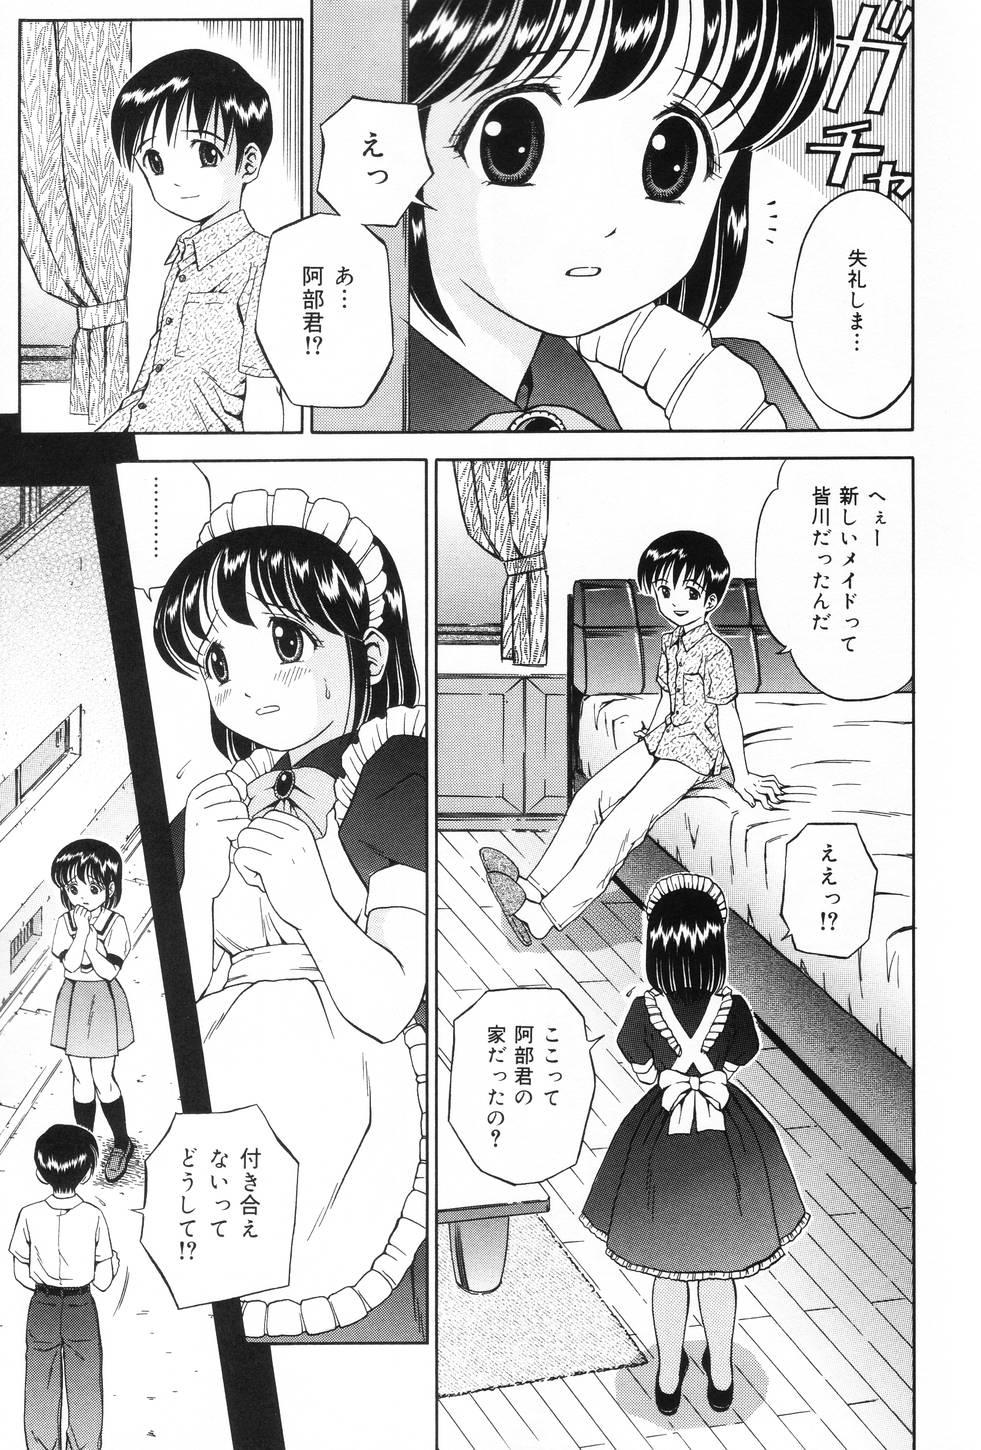 Watashi wa Maid - I am a maid 6